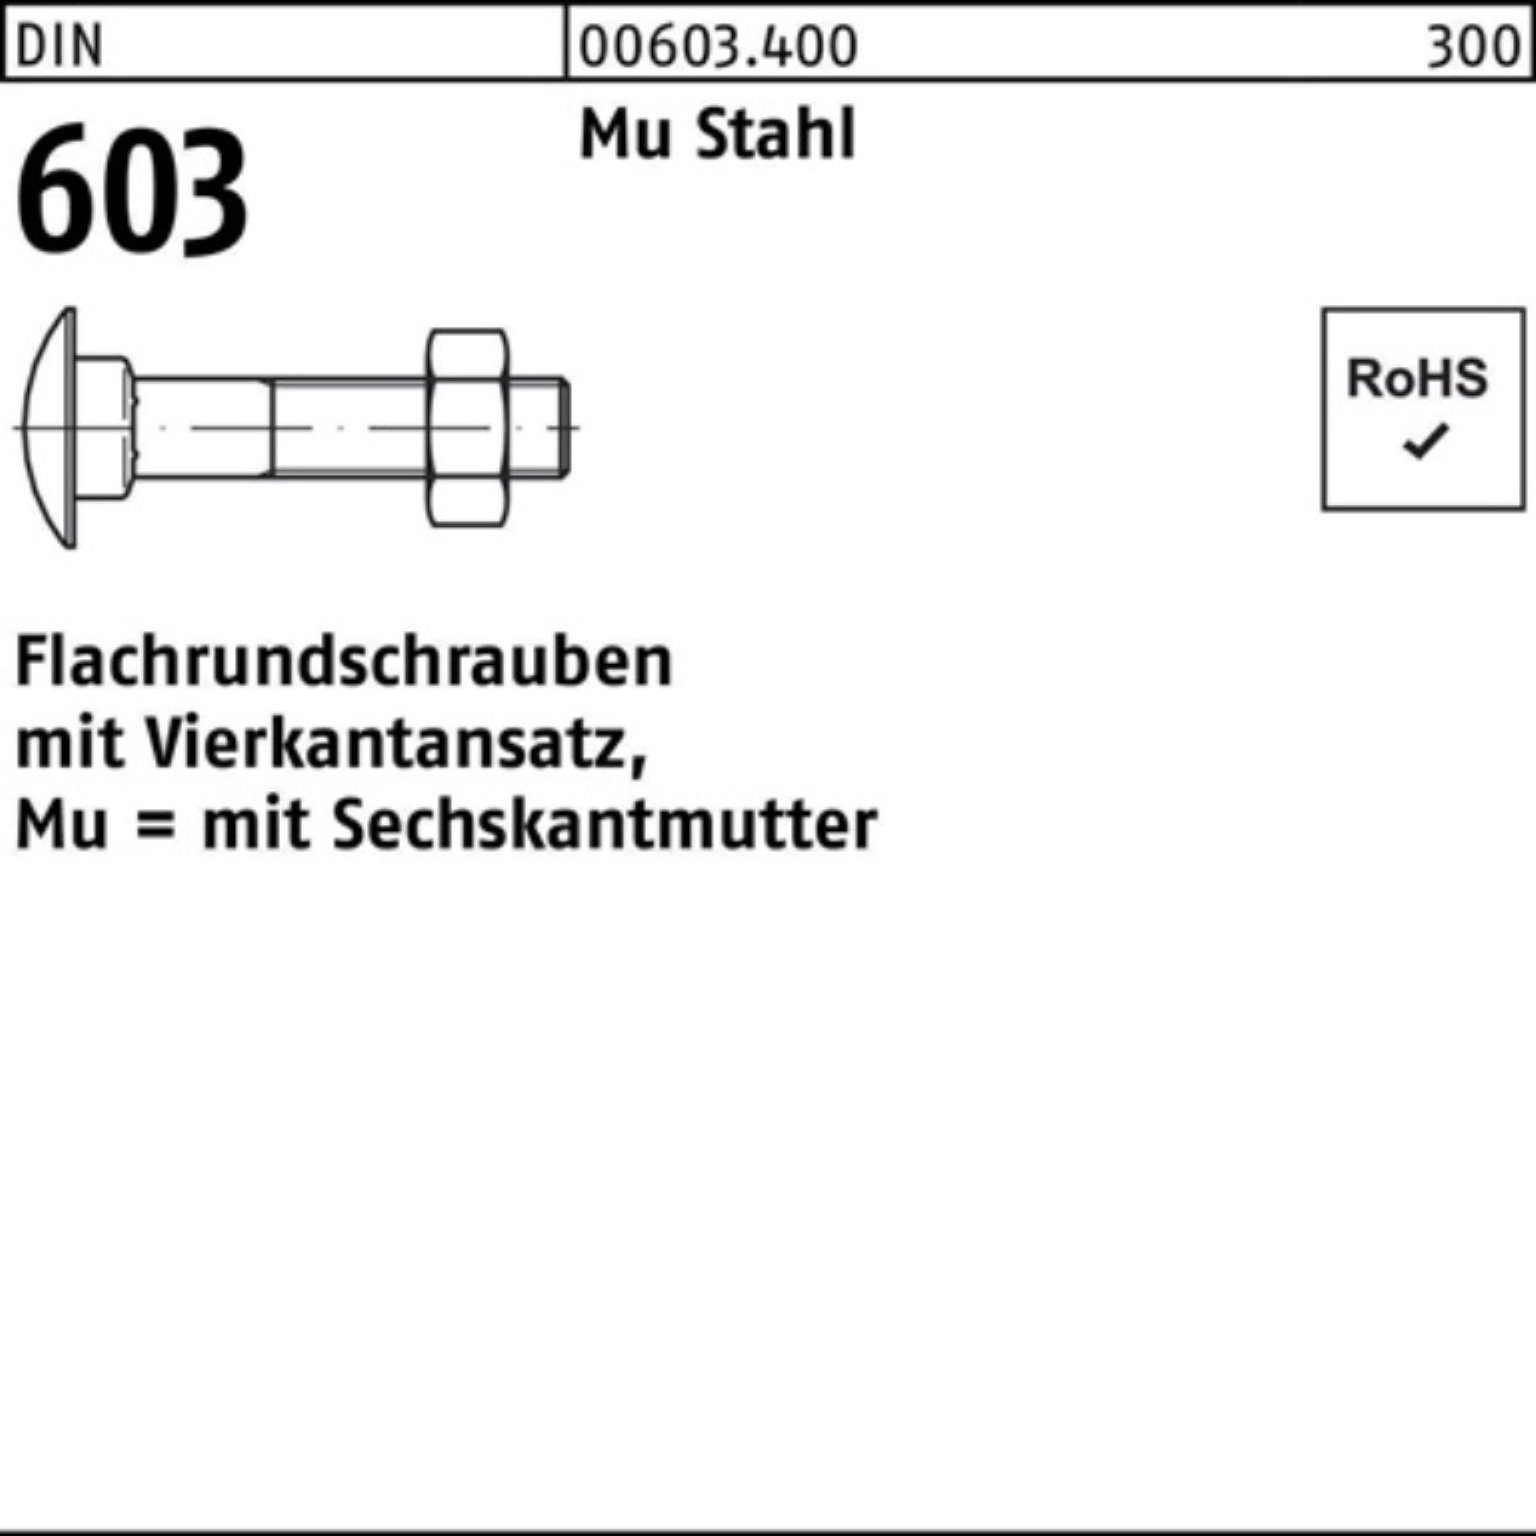 100er M8x120 DIN Pack Vierkantansatz/6-ktmutter 603 Reyher Flachrundschraube Schraube